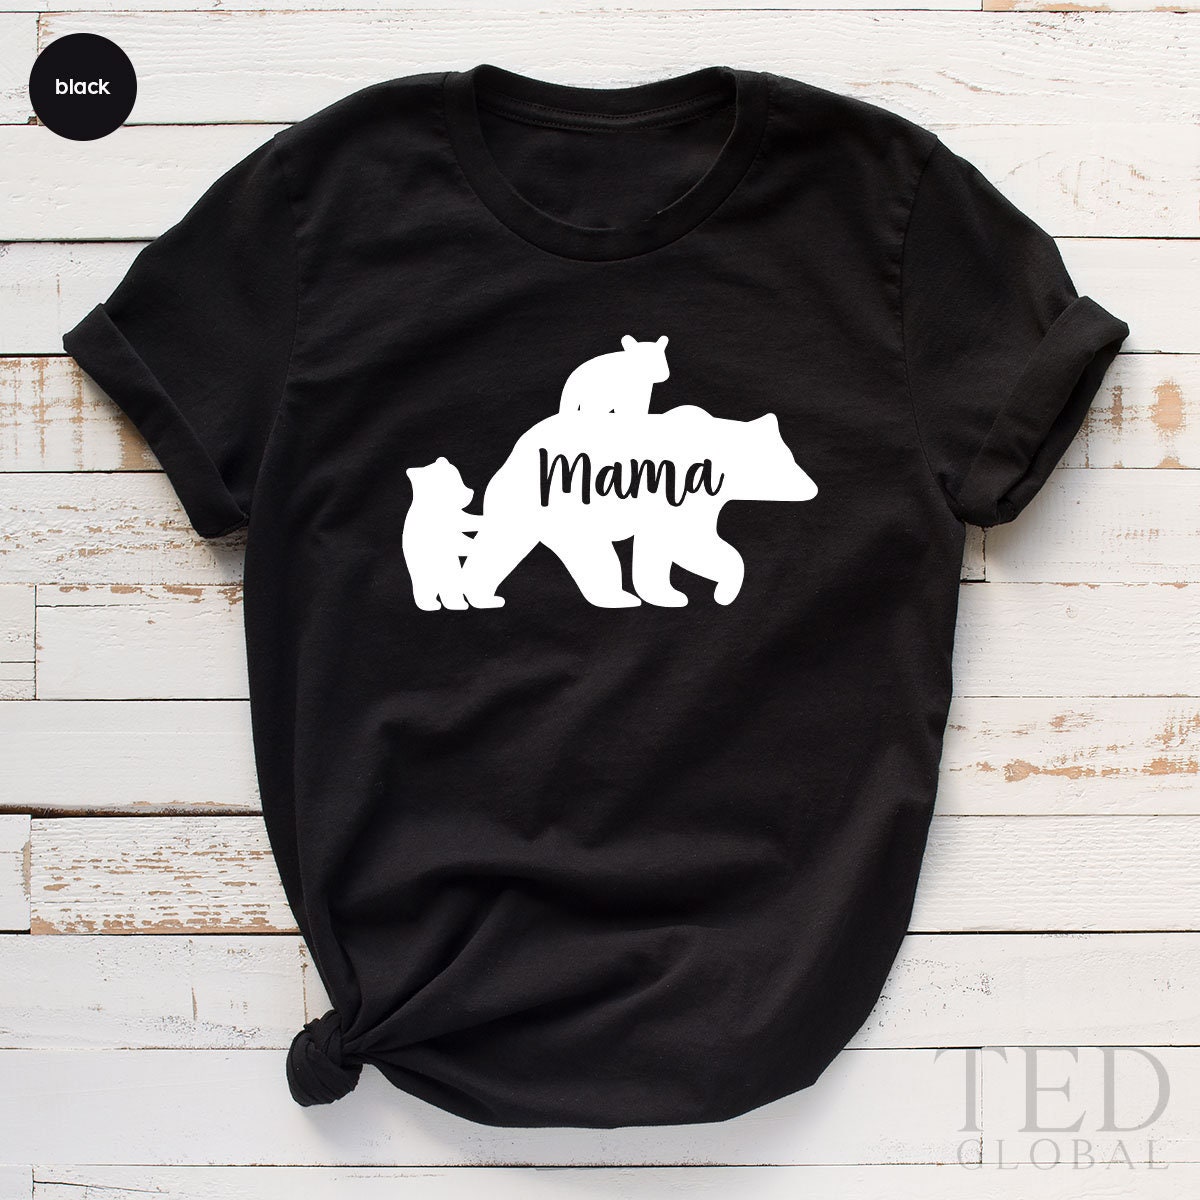 Bear Mama T Shirt, Cute Bear TShirt, Mama Bear T-Shirt, Gift For Grandma, Mama Bear Tee, Mothers Day Tee, Shirts For Moms,  Funny Mom Shirt - Fastdeliverytees.com